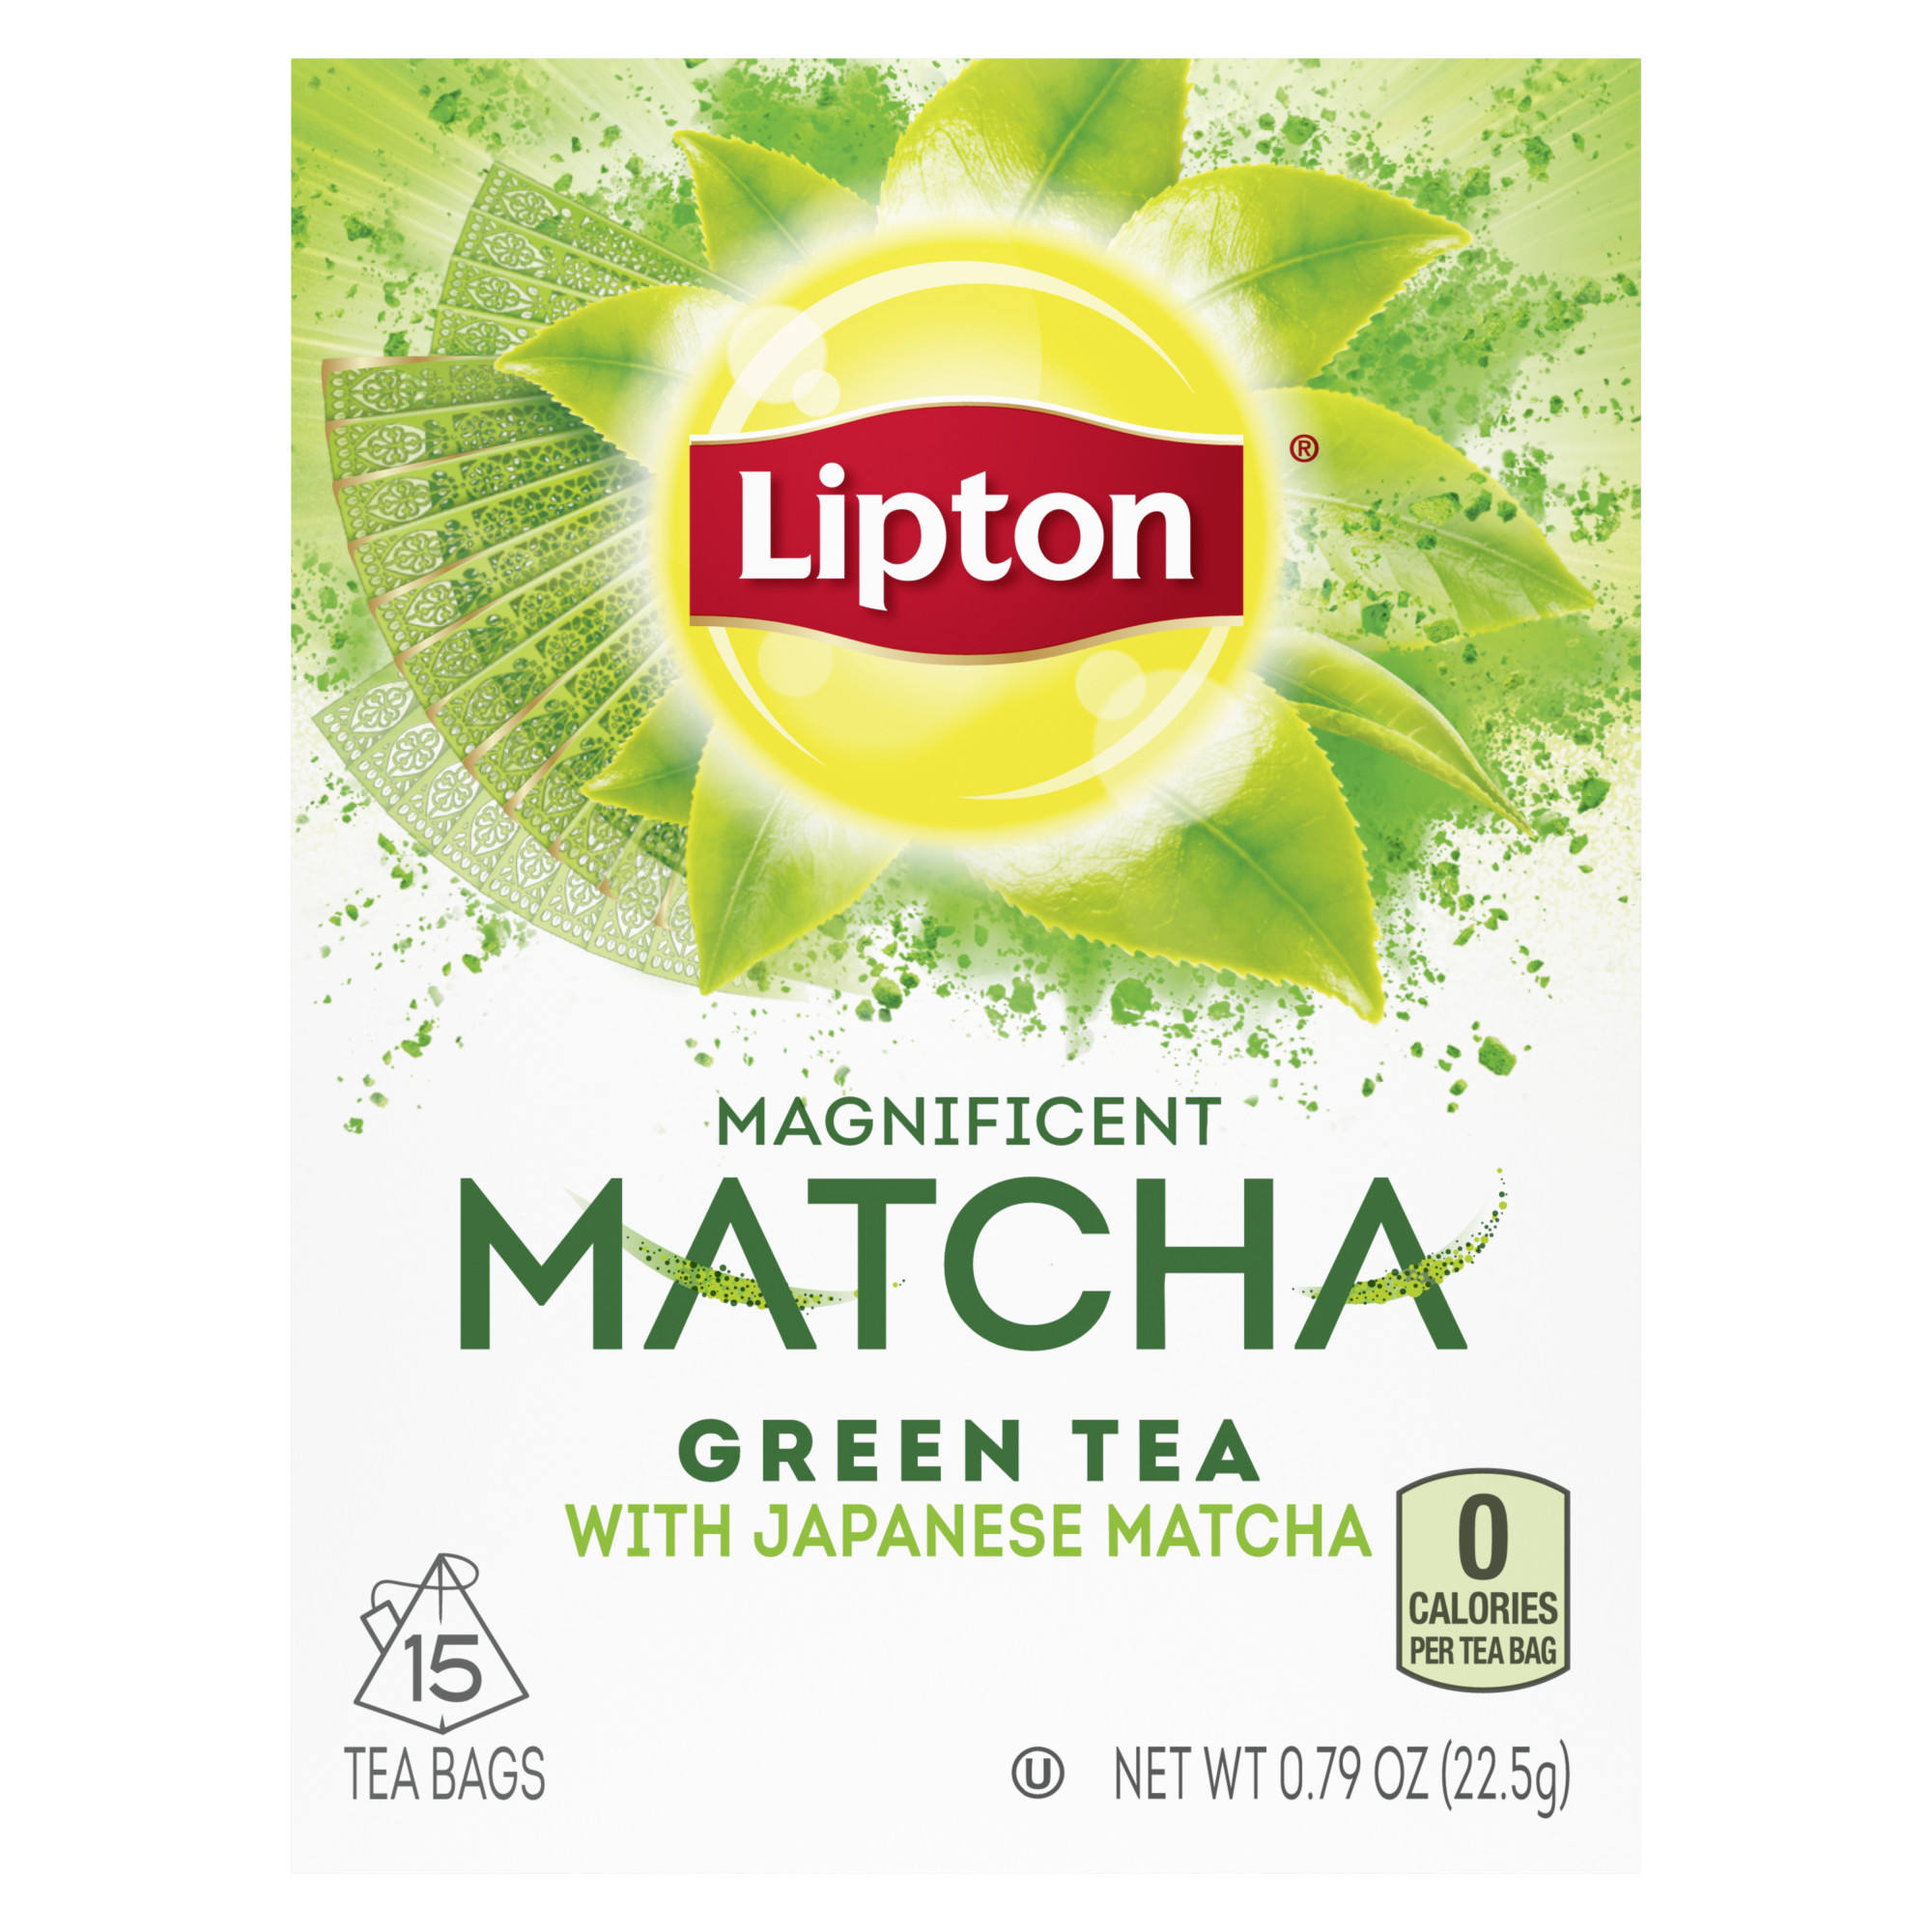 Lipton Magnificent Matcha Green Tea, Caffeinated, Tea Bags 15 Count - image 1 of 9